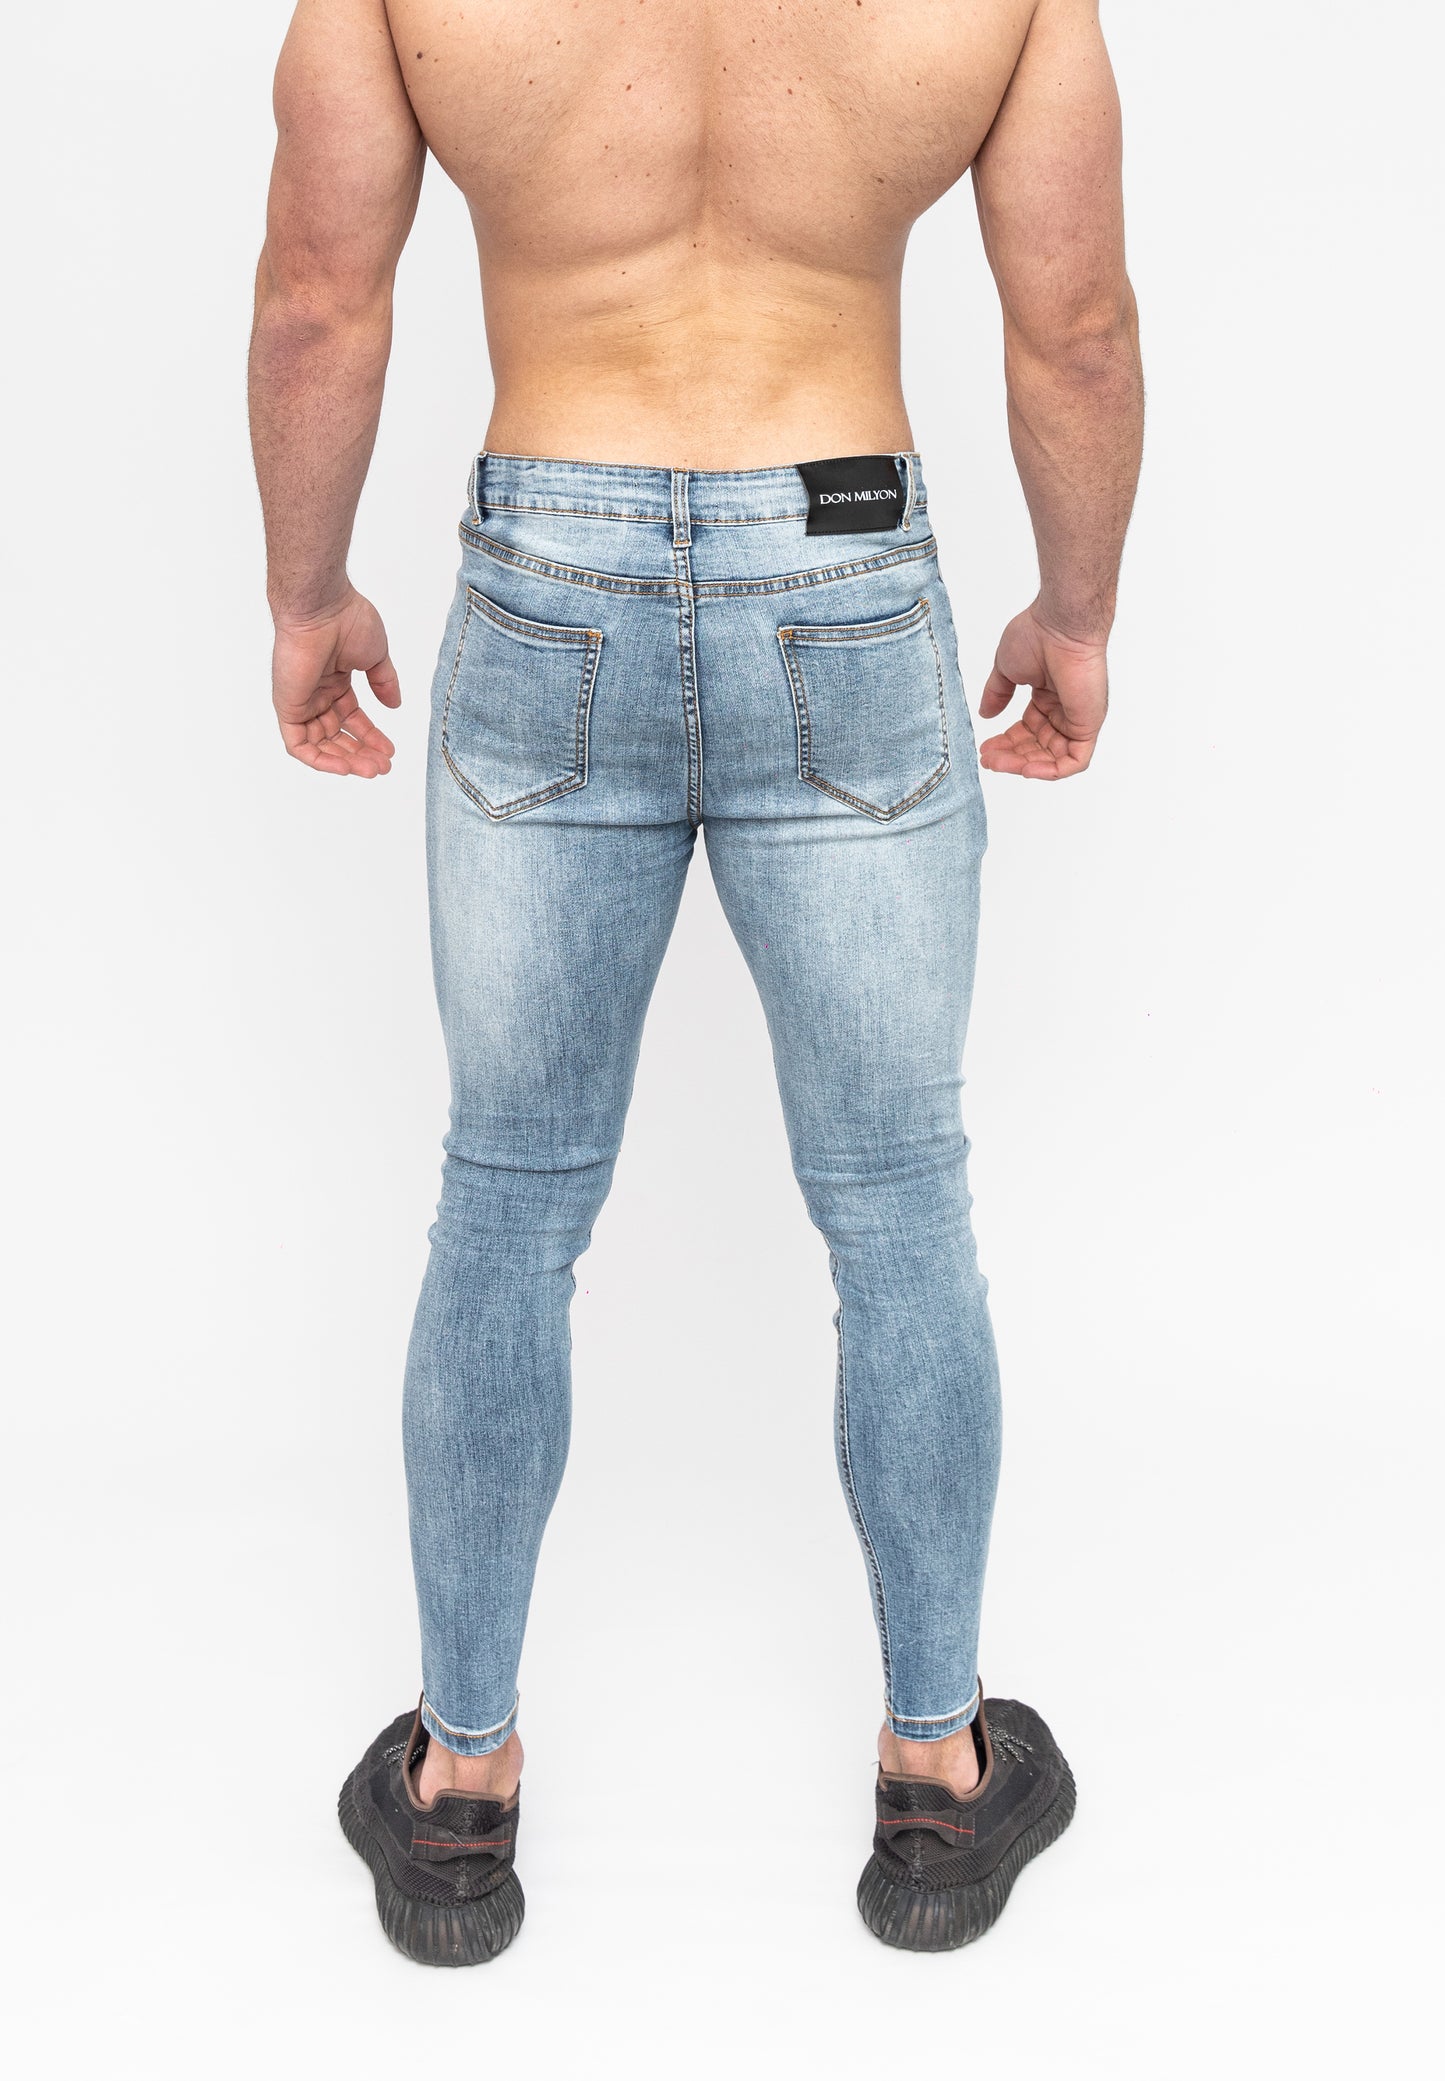 Men's Blue Skinny Fit Stretch Jeans Pants Rear Glutes